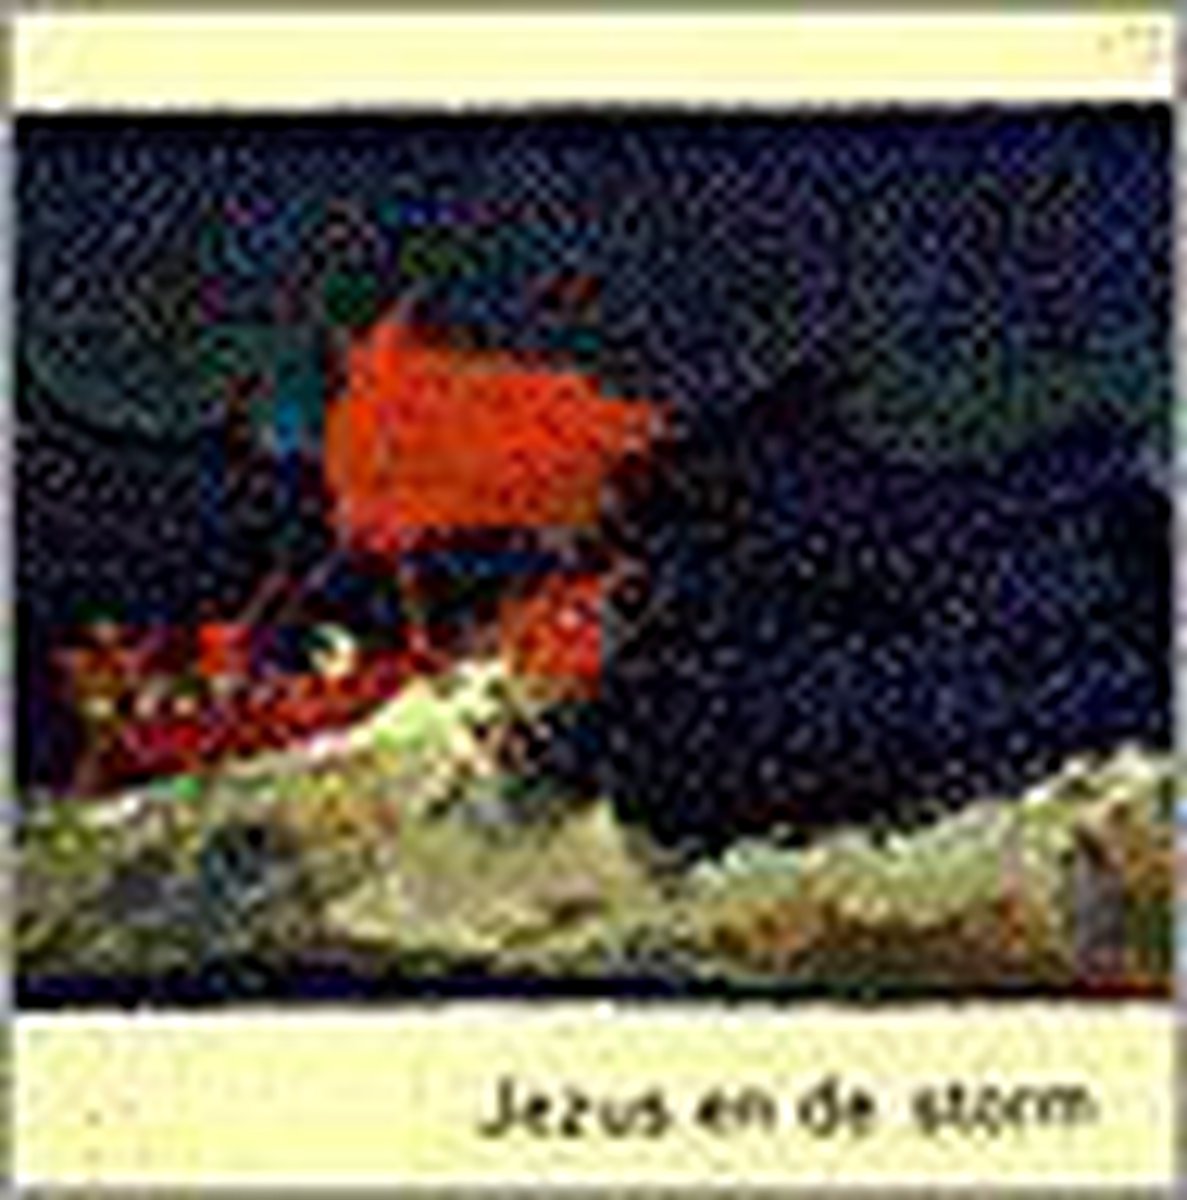 Jezus En De Storm